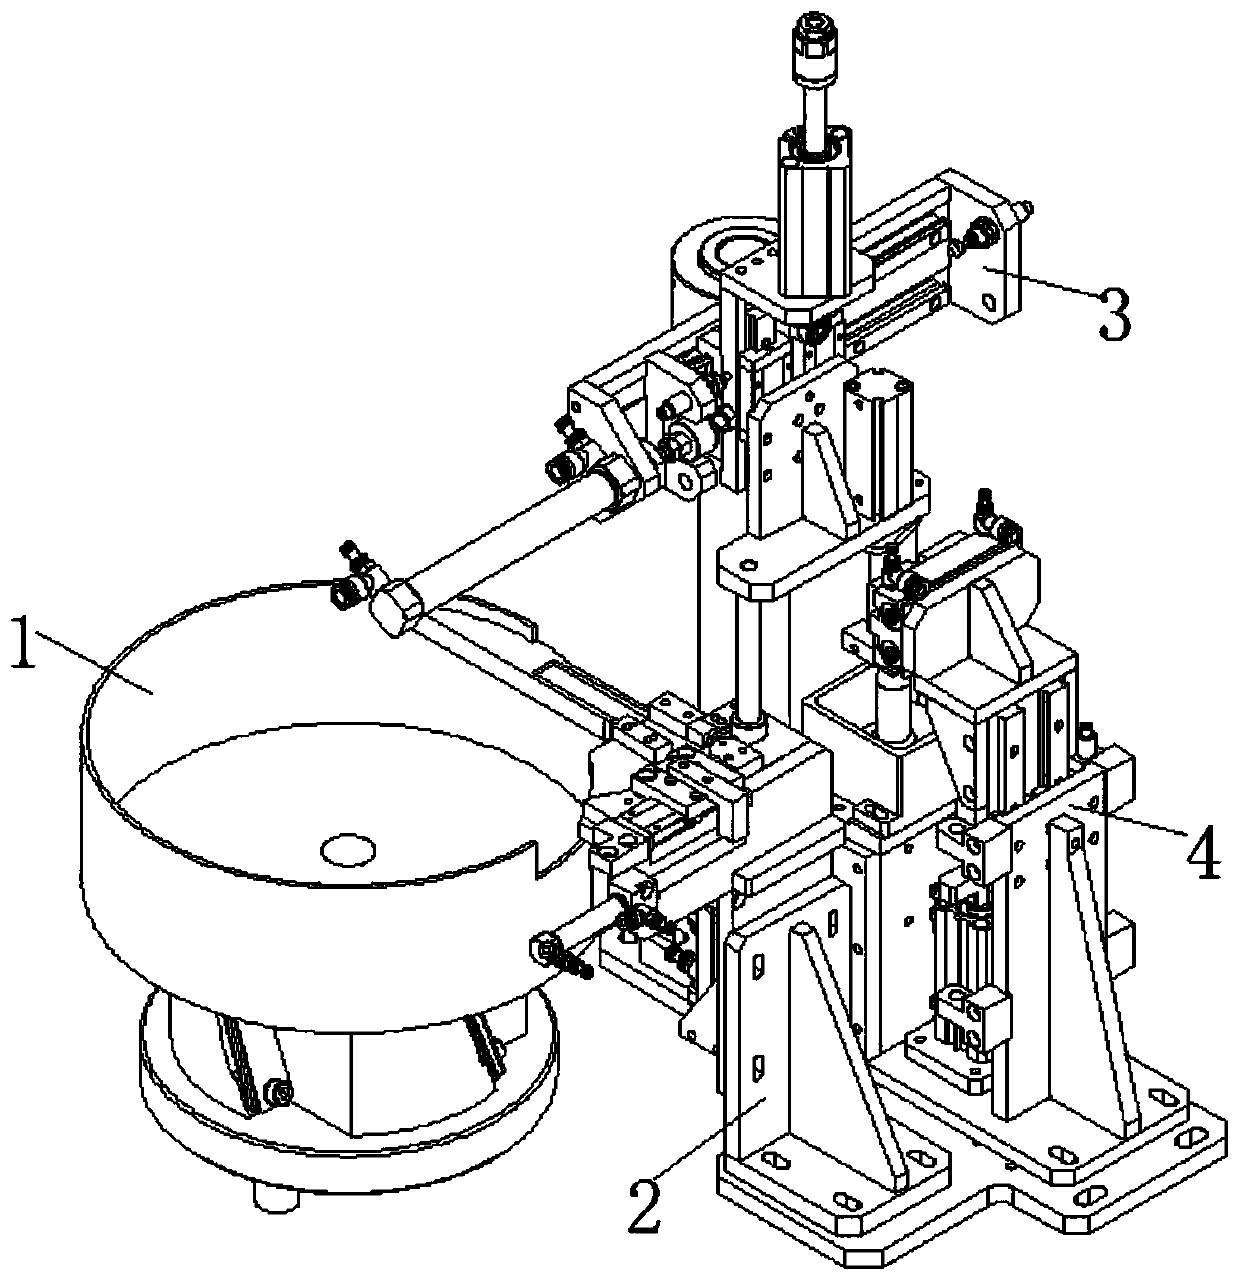 Cylinder sealing ring feeding device